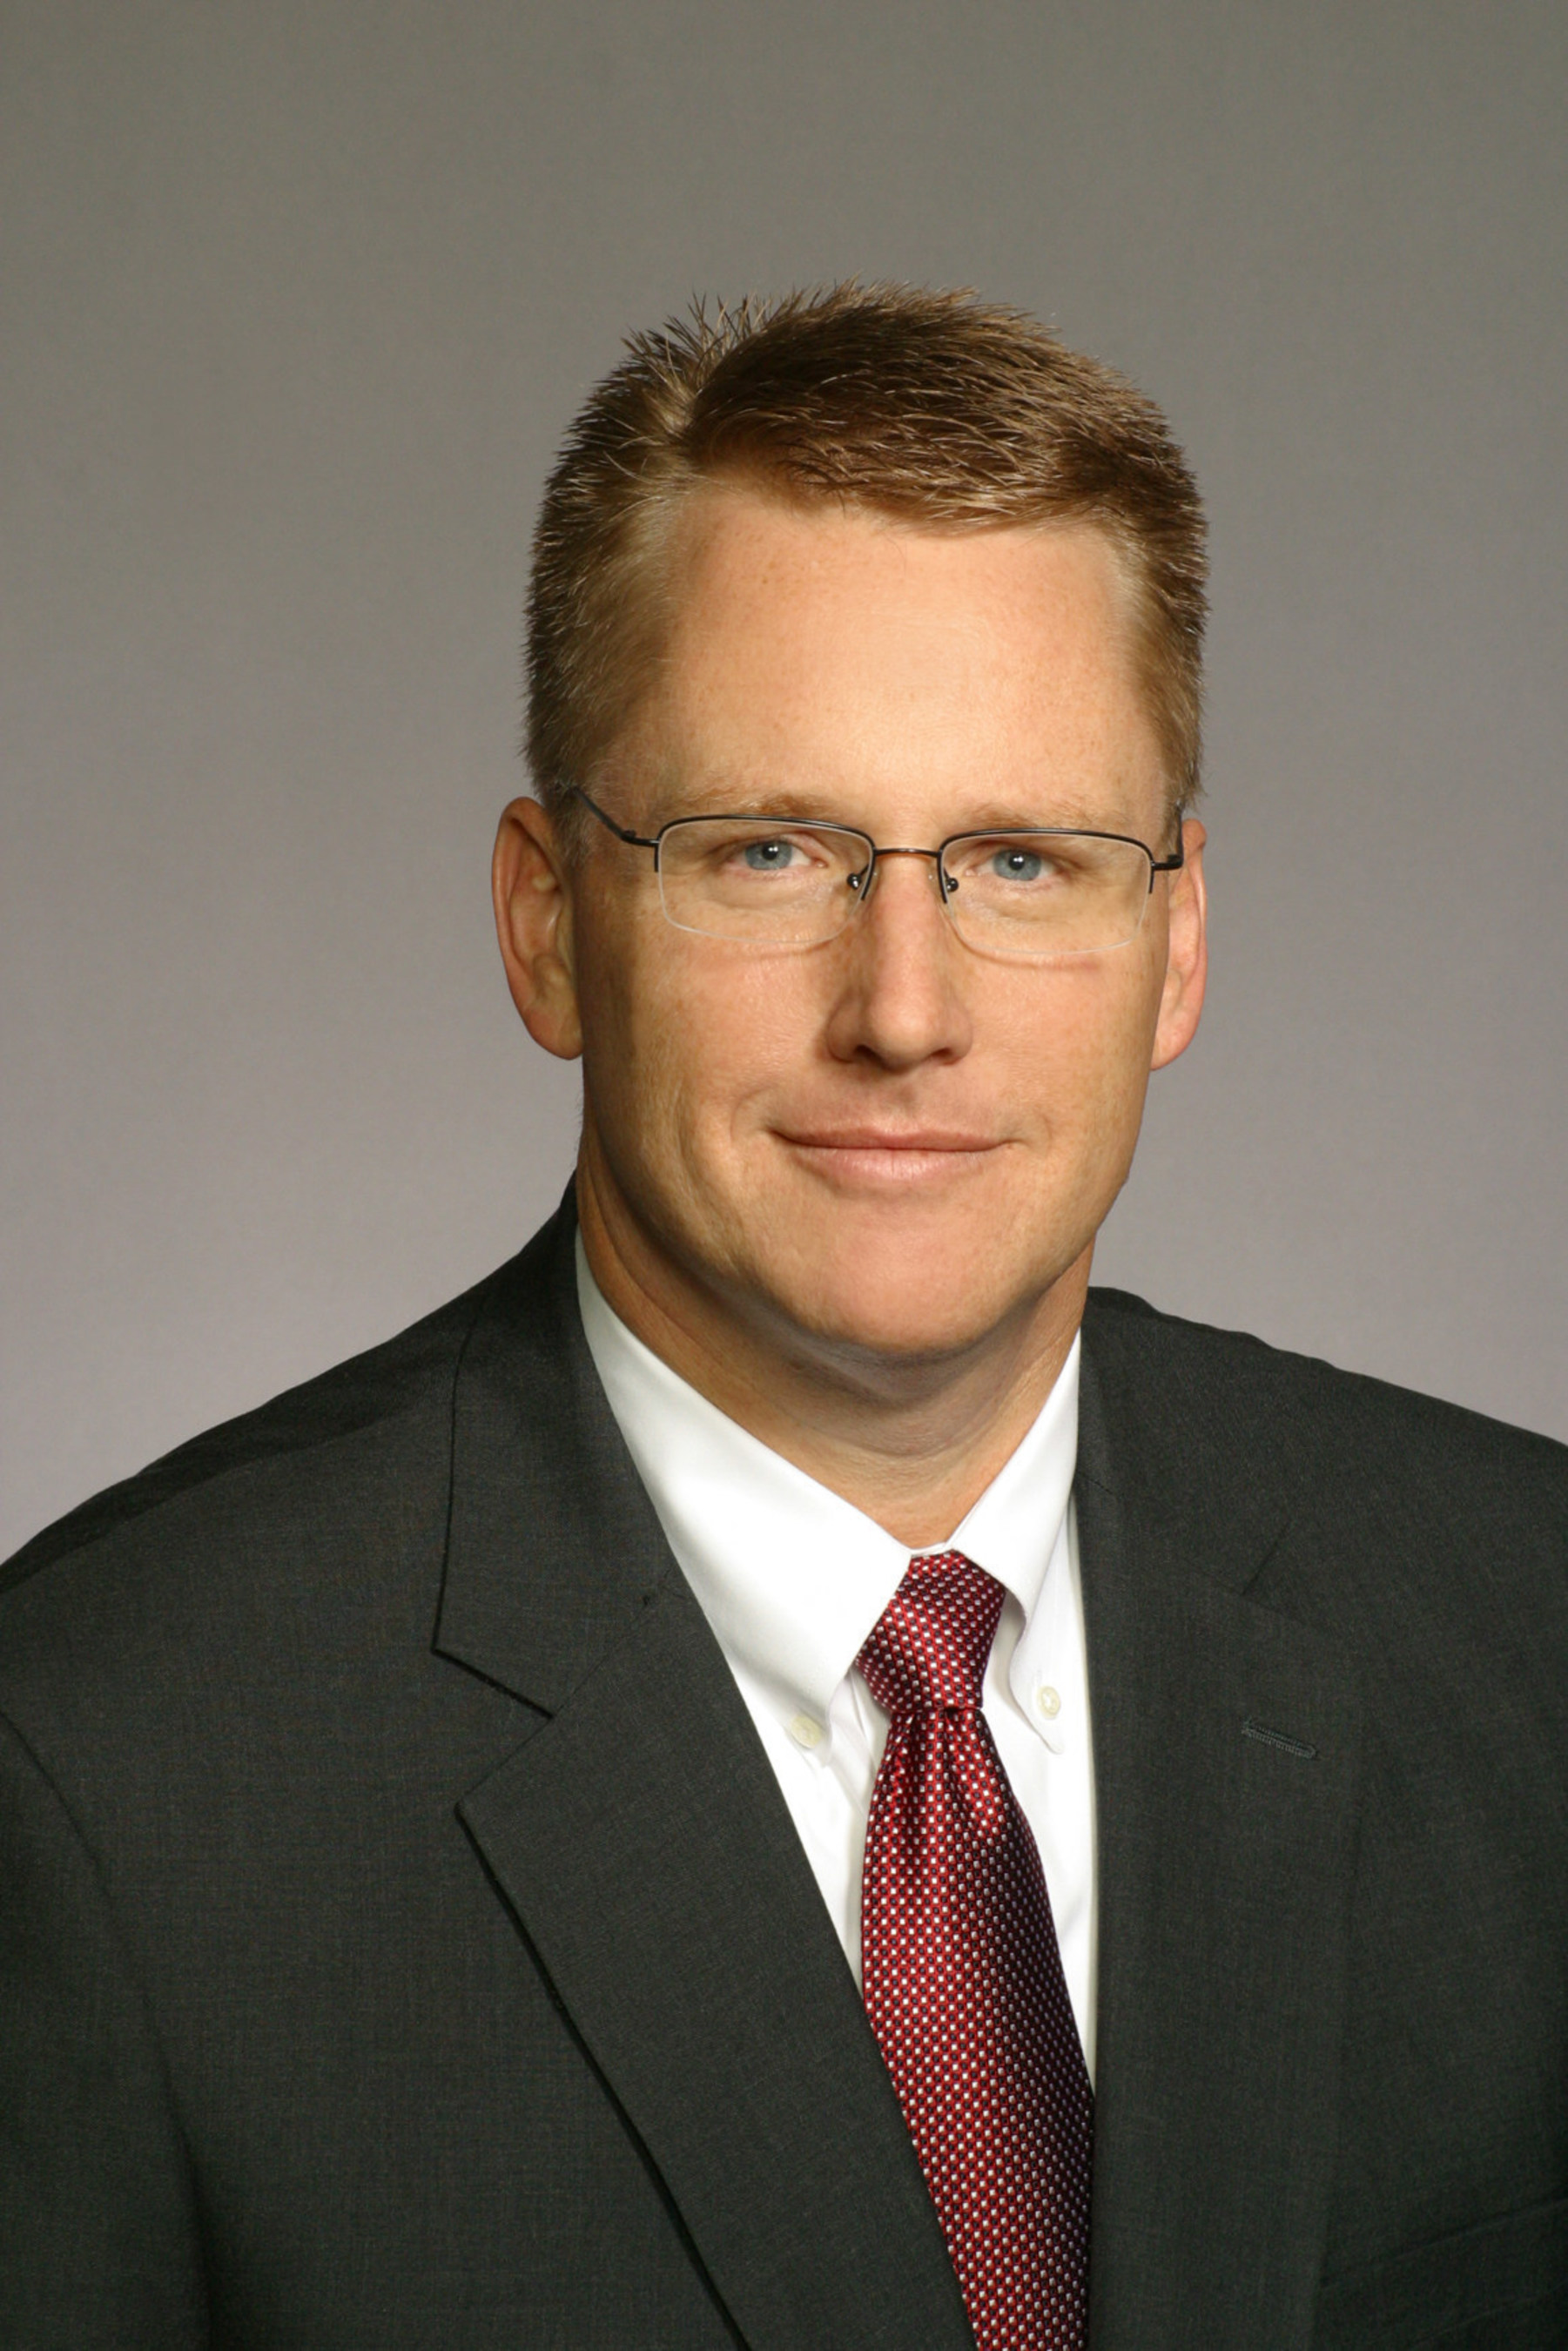 Cory J. Reed is appointed President, John Deere Financial, effective November 1.